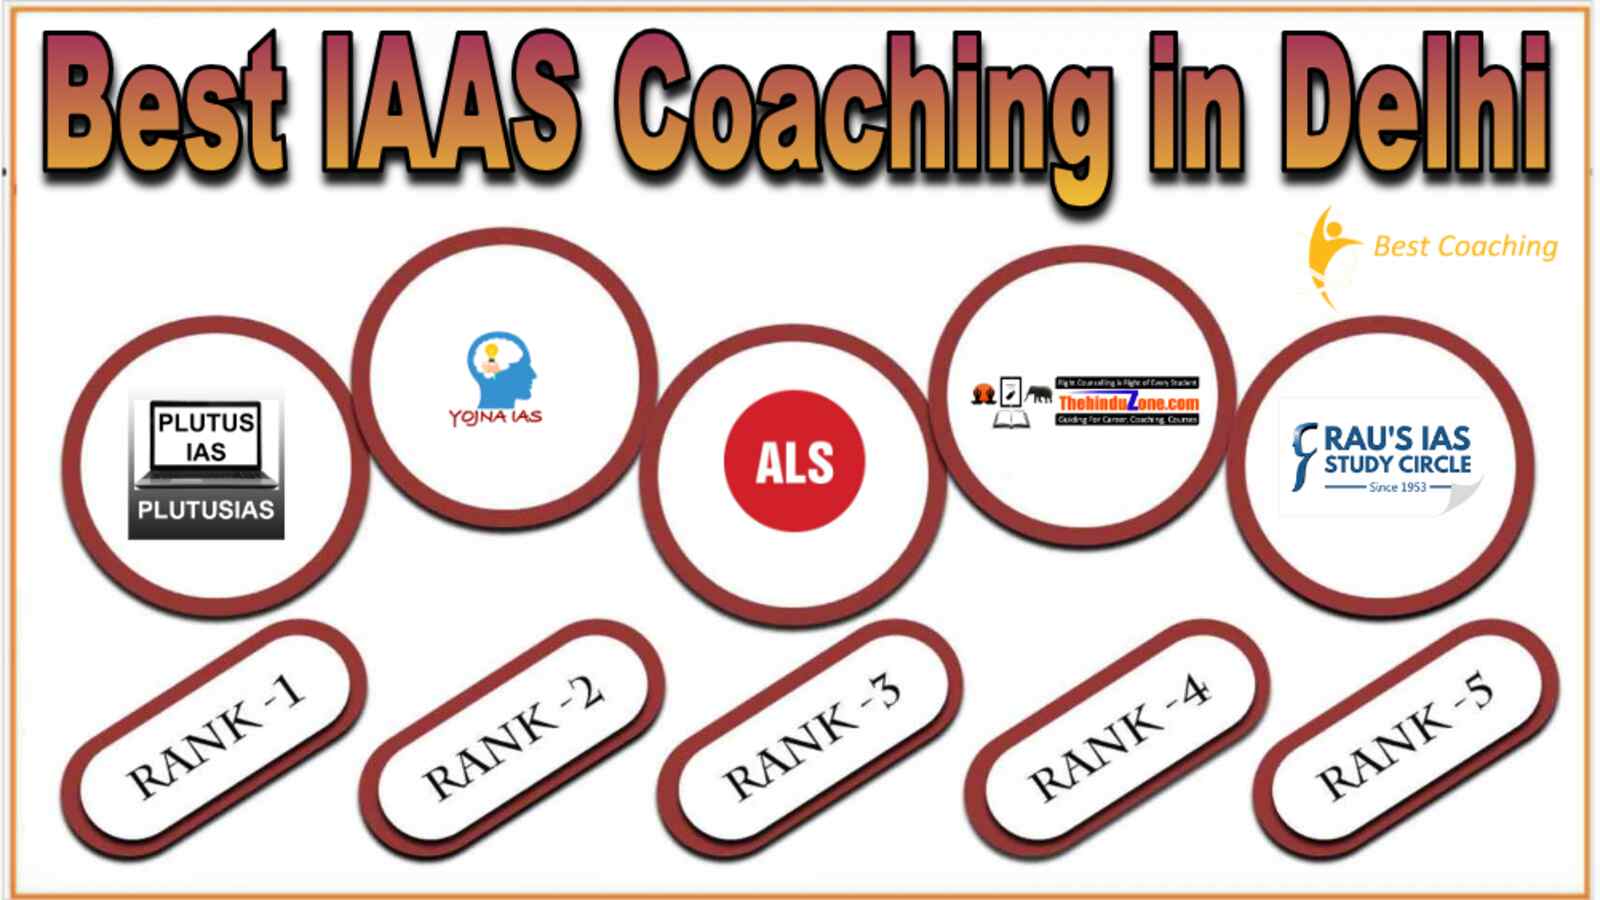 Best IAAS Coaching in Delhi